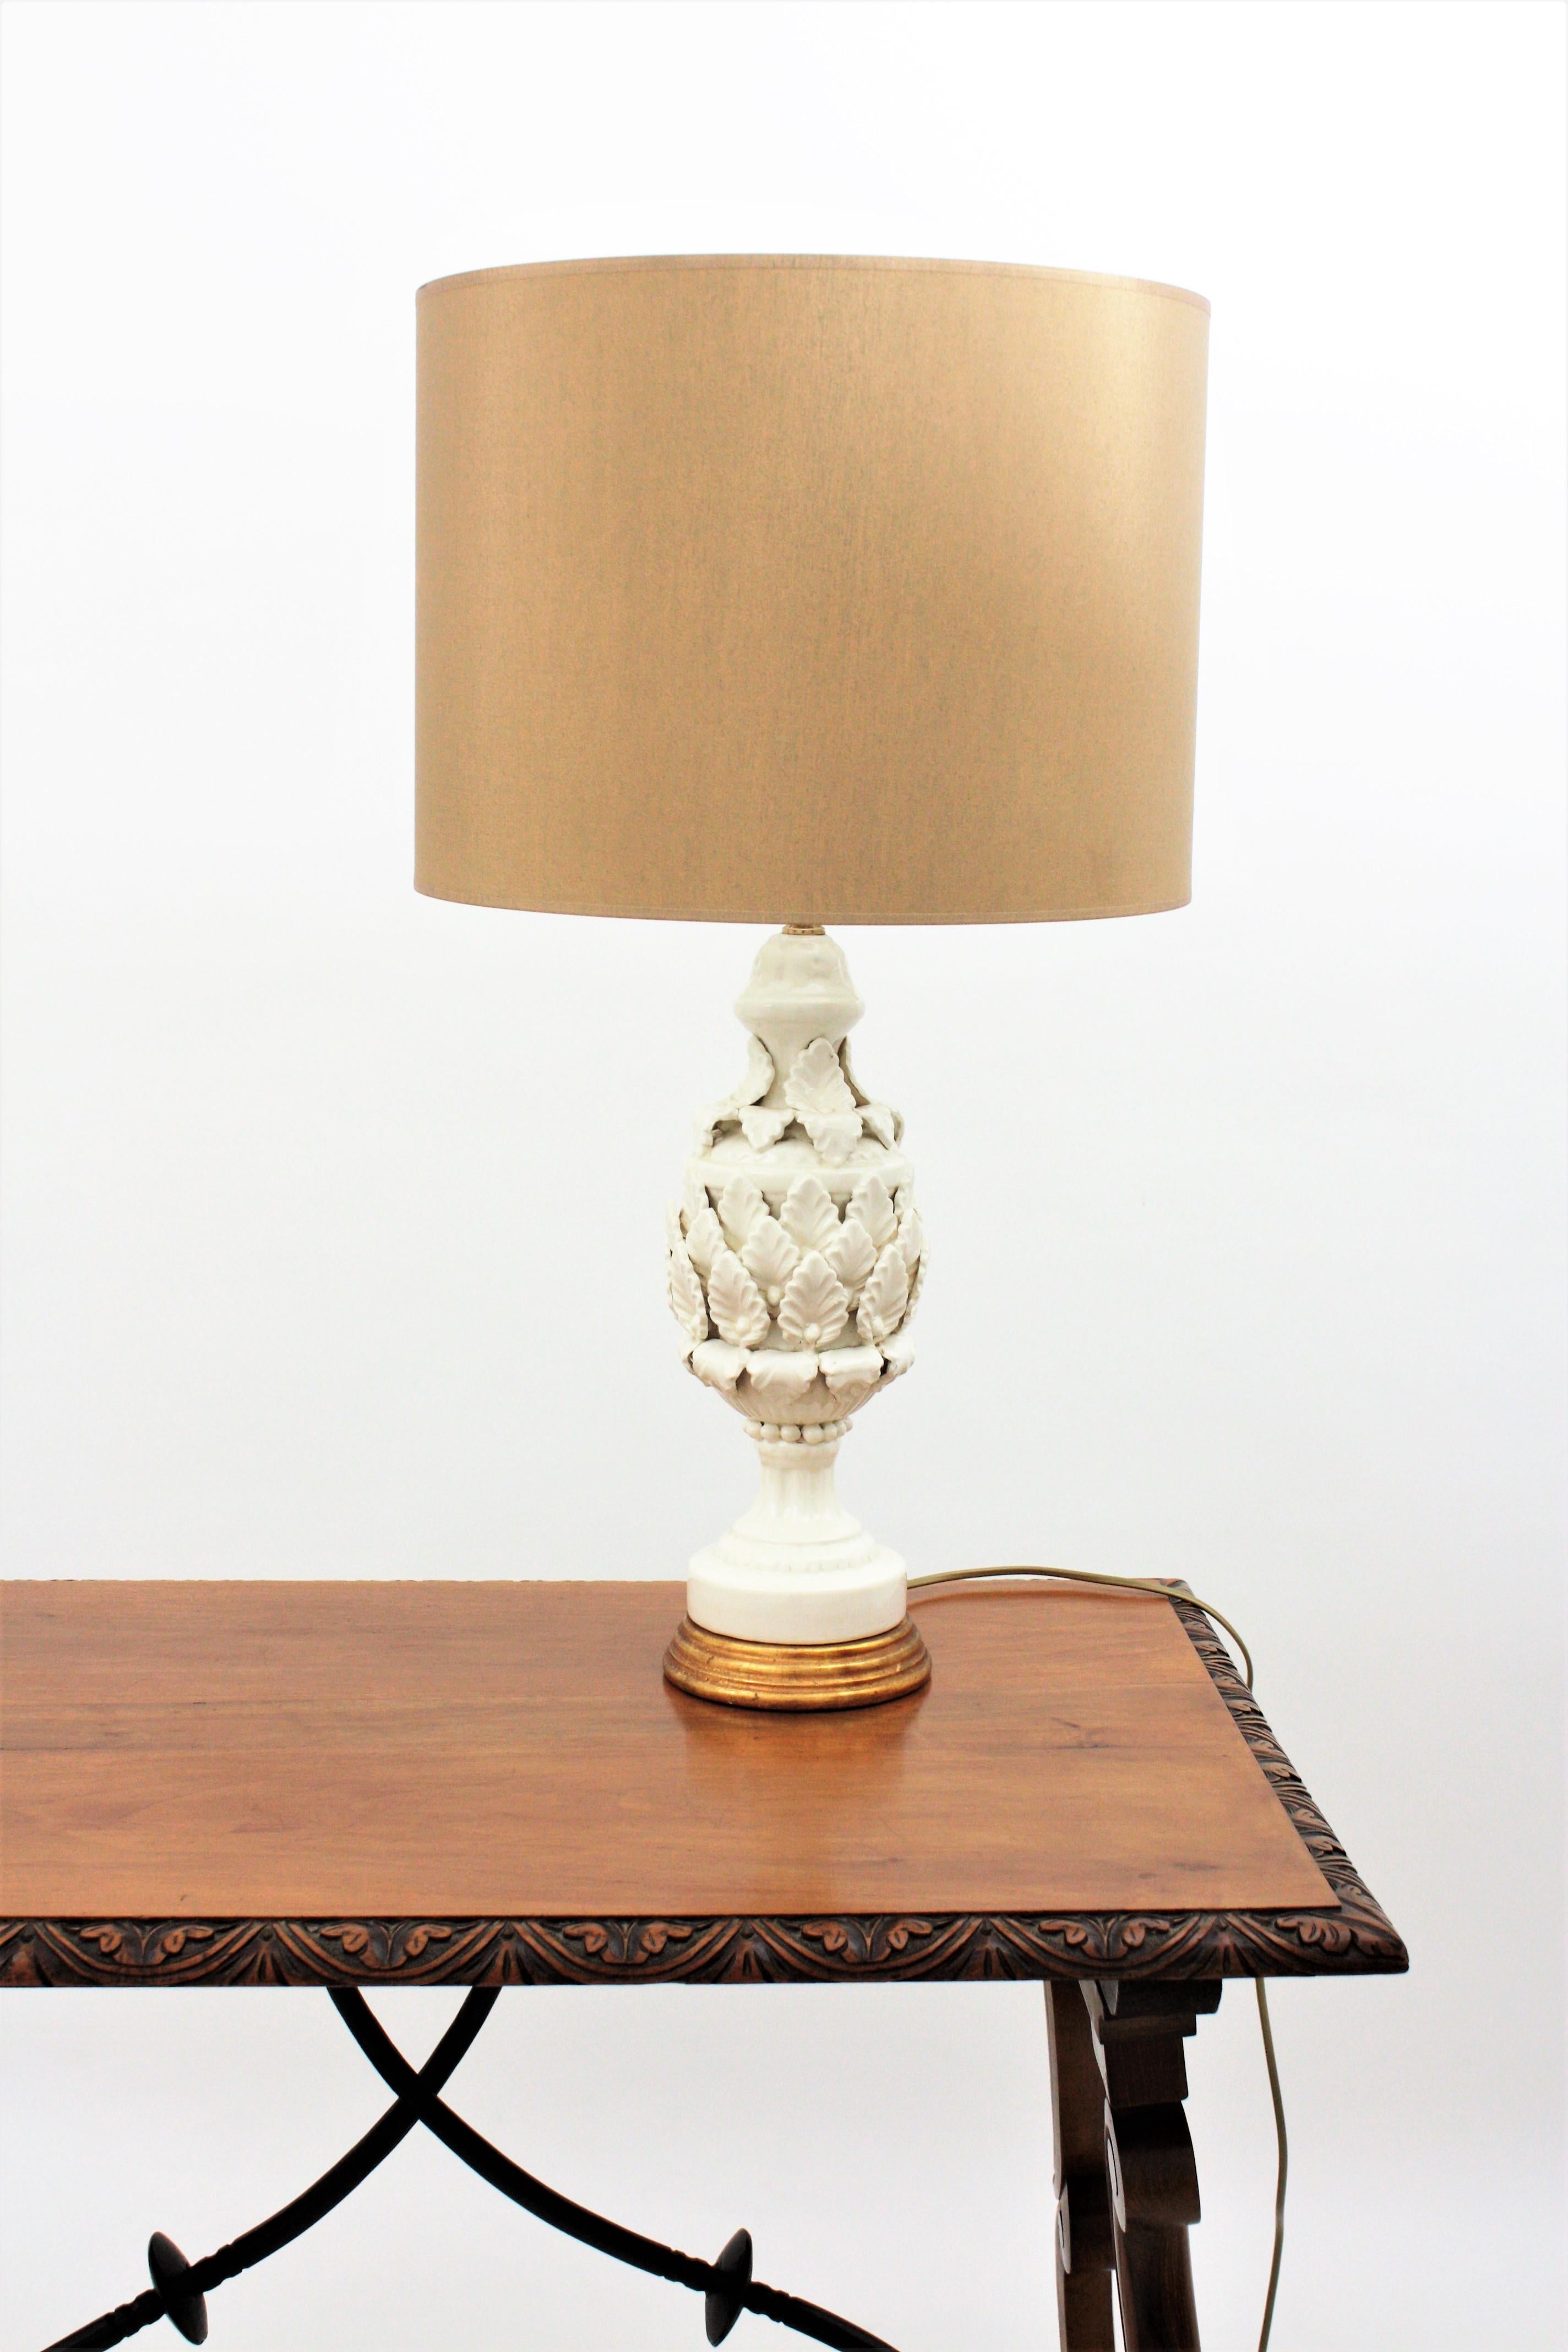 20th Century Spanish Manises Majolica White Glazed Ceramic Table Lamp on Giltwood Pedestal